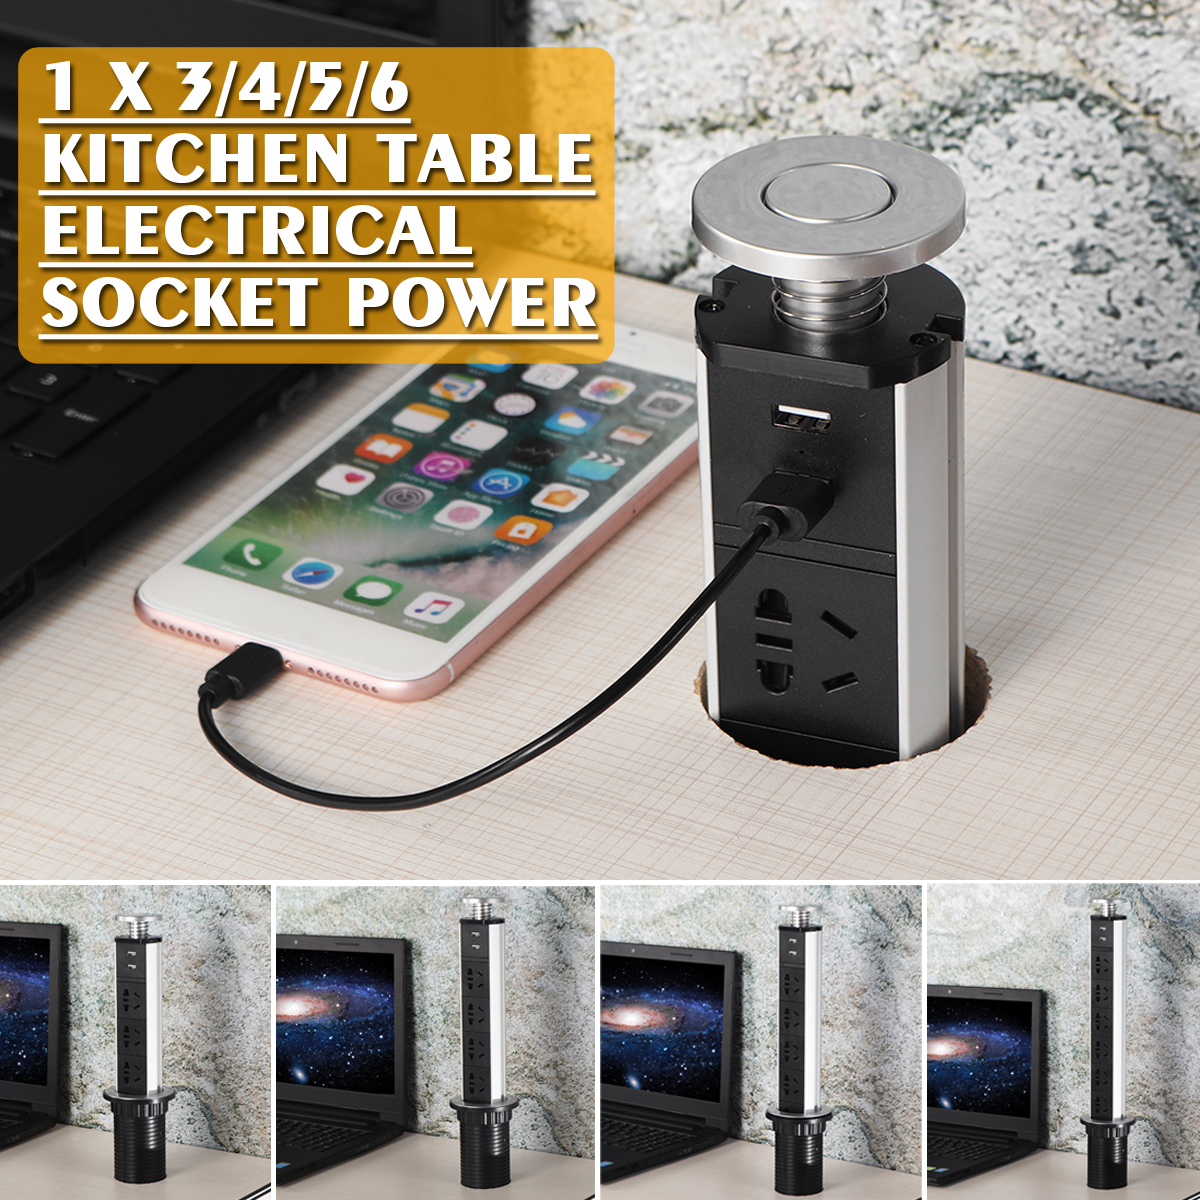 Electrical-Socket-Power-Hidden-Kitchen-Table-USB-Charger-Aluminum-Shelf-1567170-2